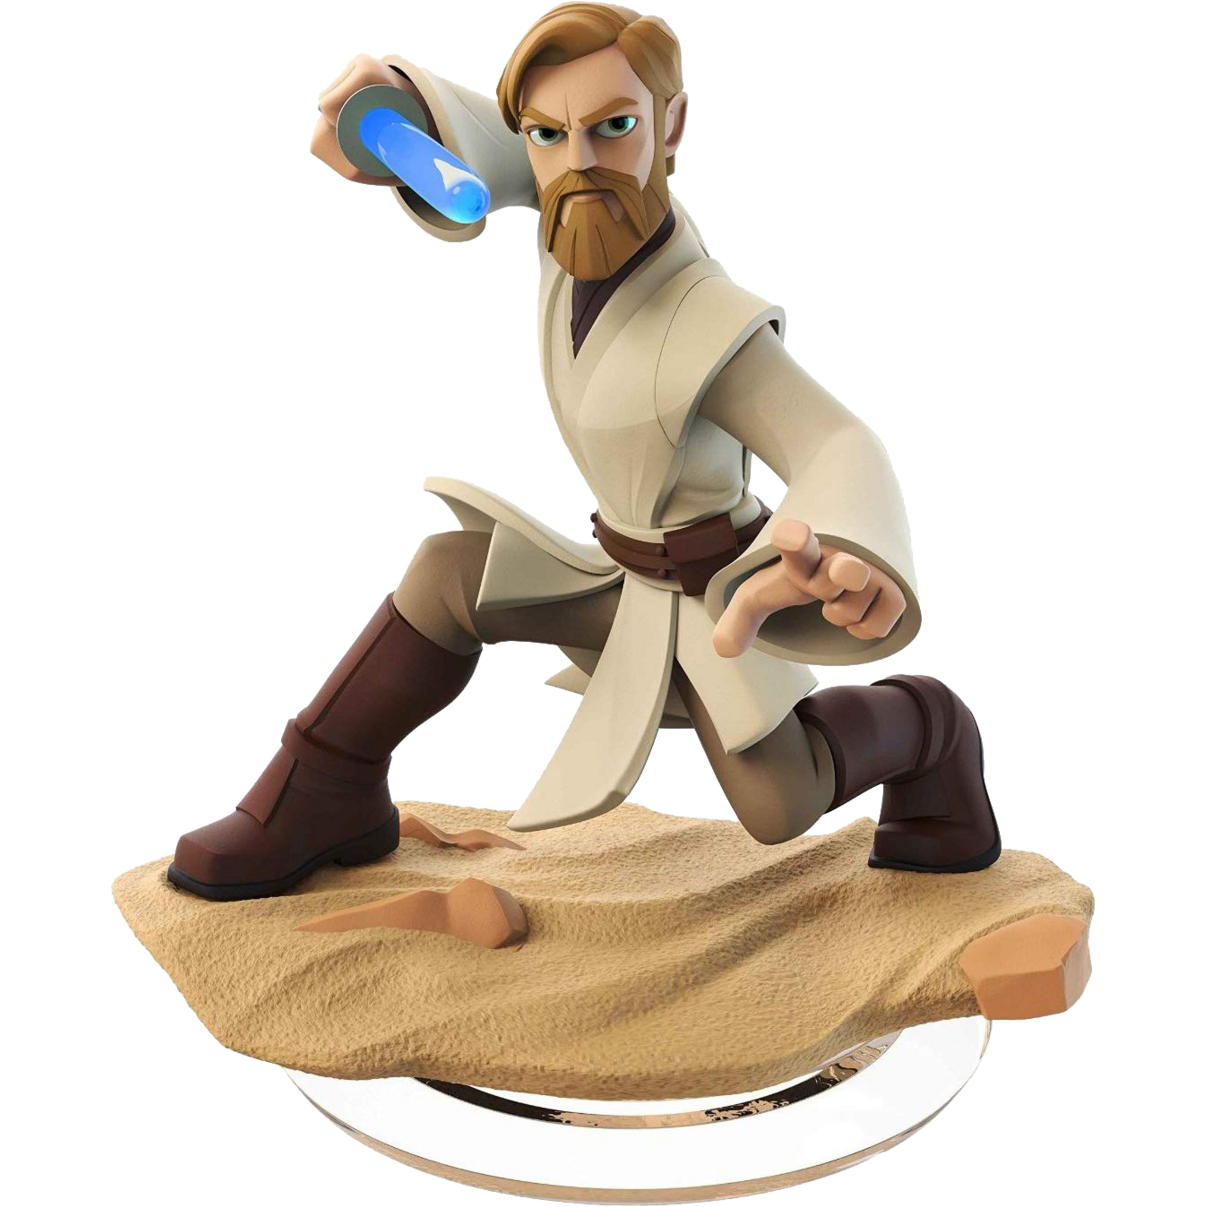 Disney Infinity 3.0 - Obi Wan Kenobi Figure